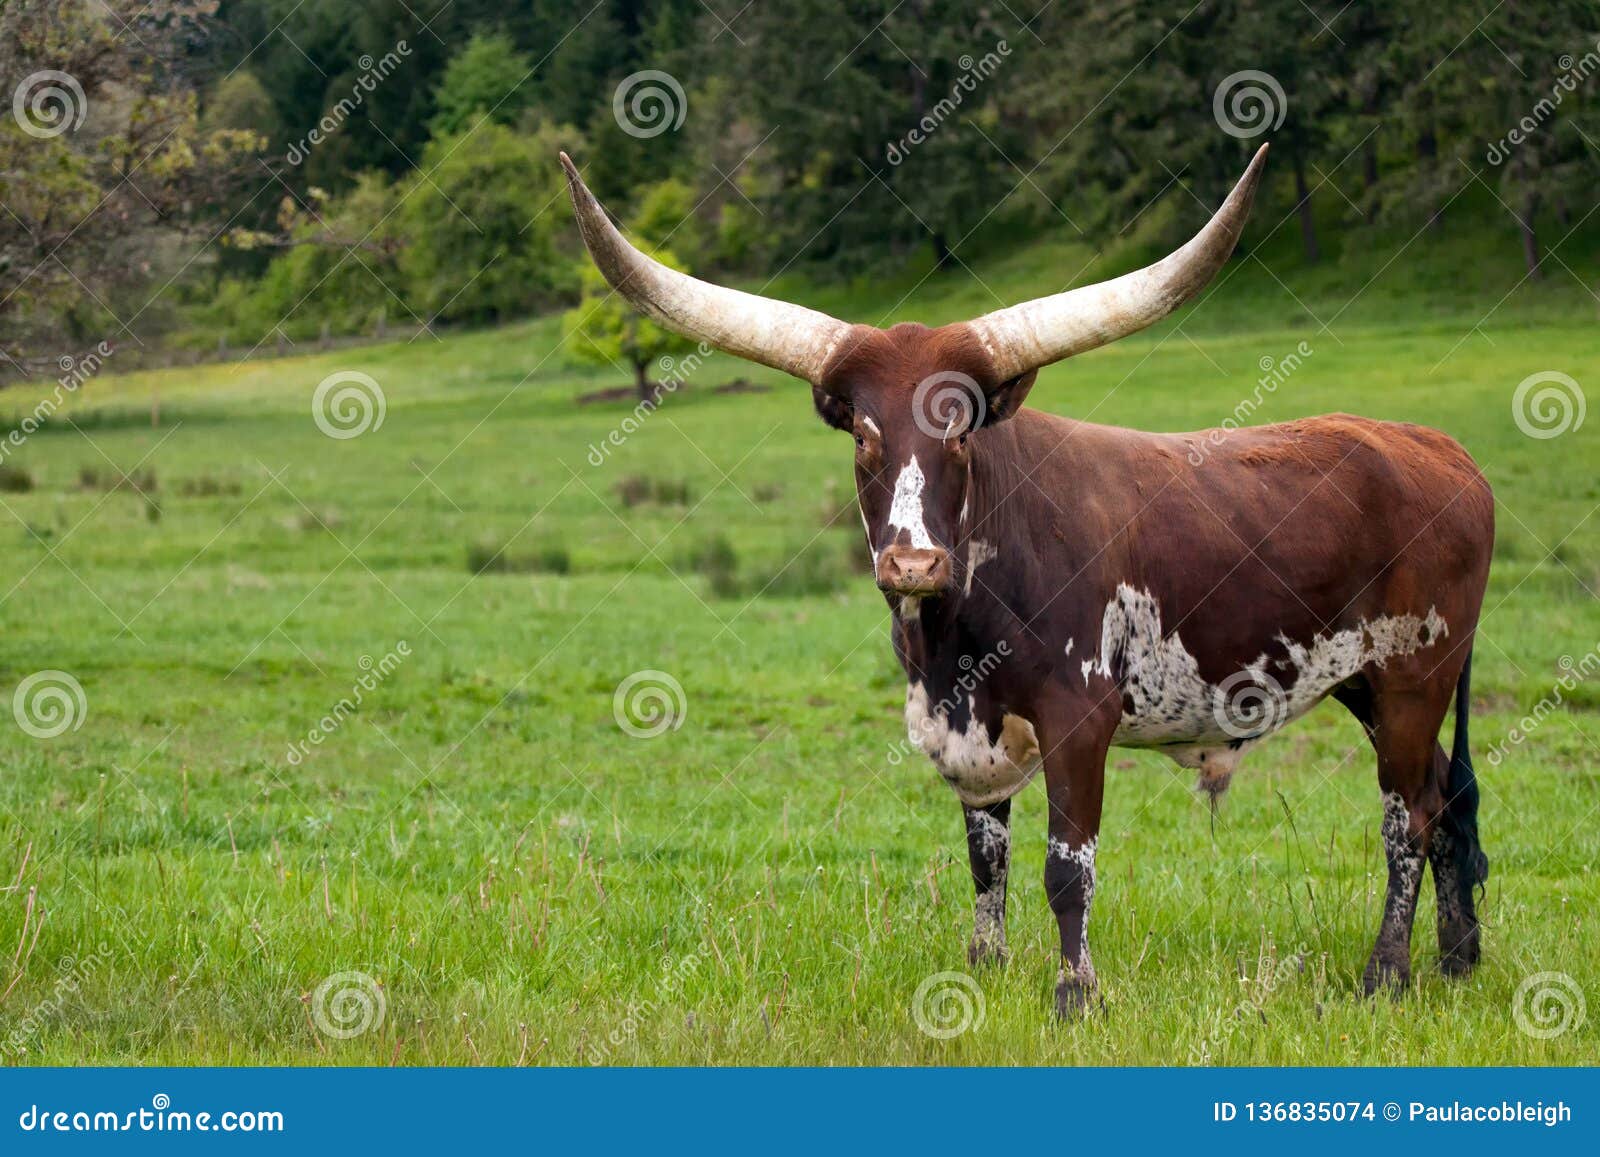 ankole watusi longhorn cow in green pasture